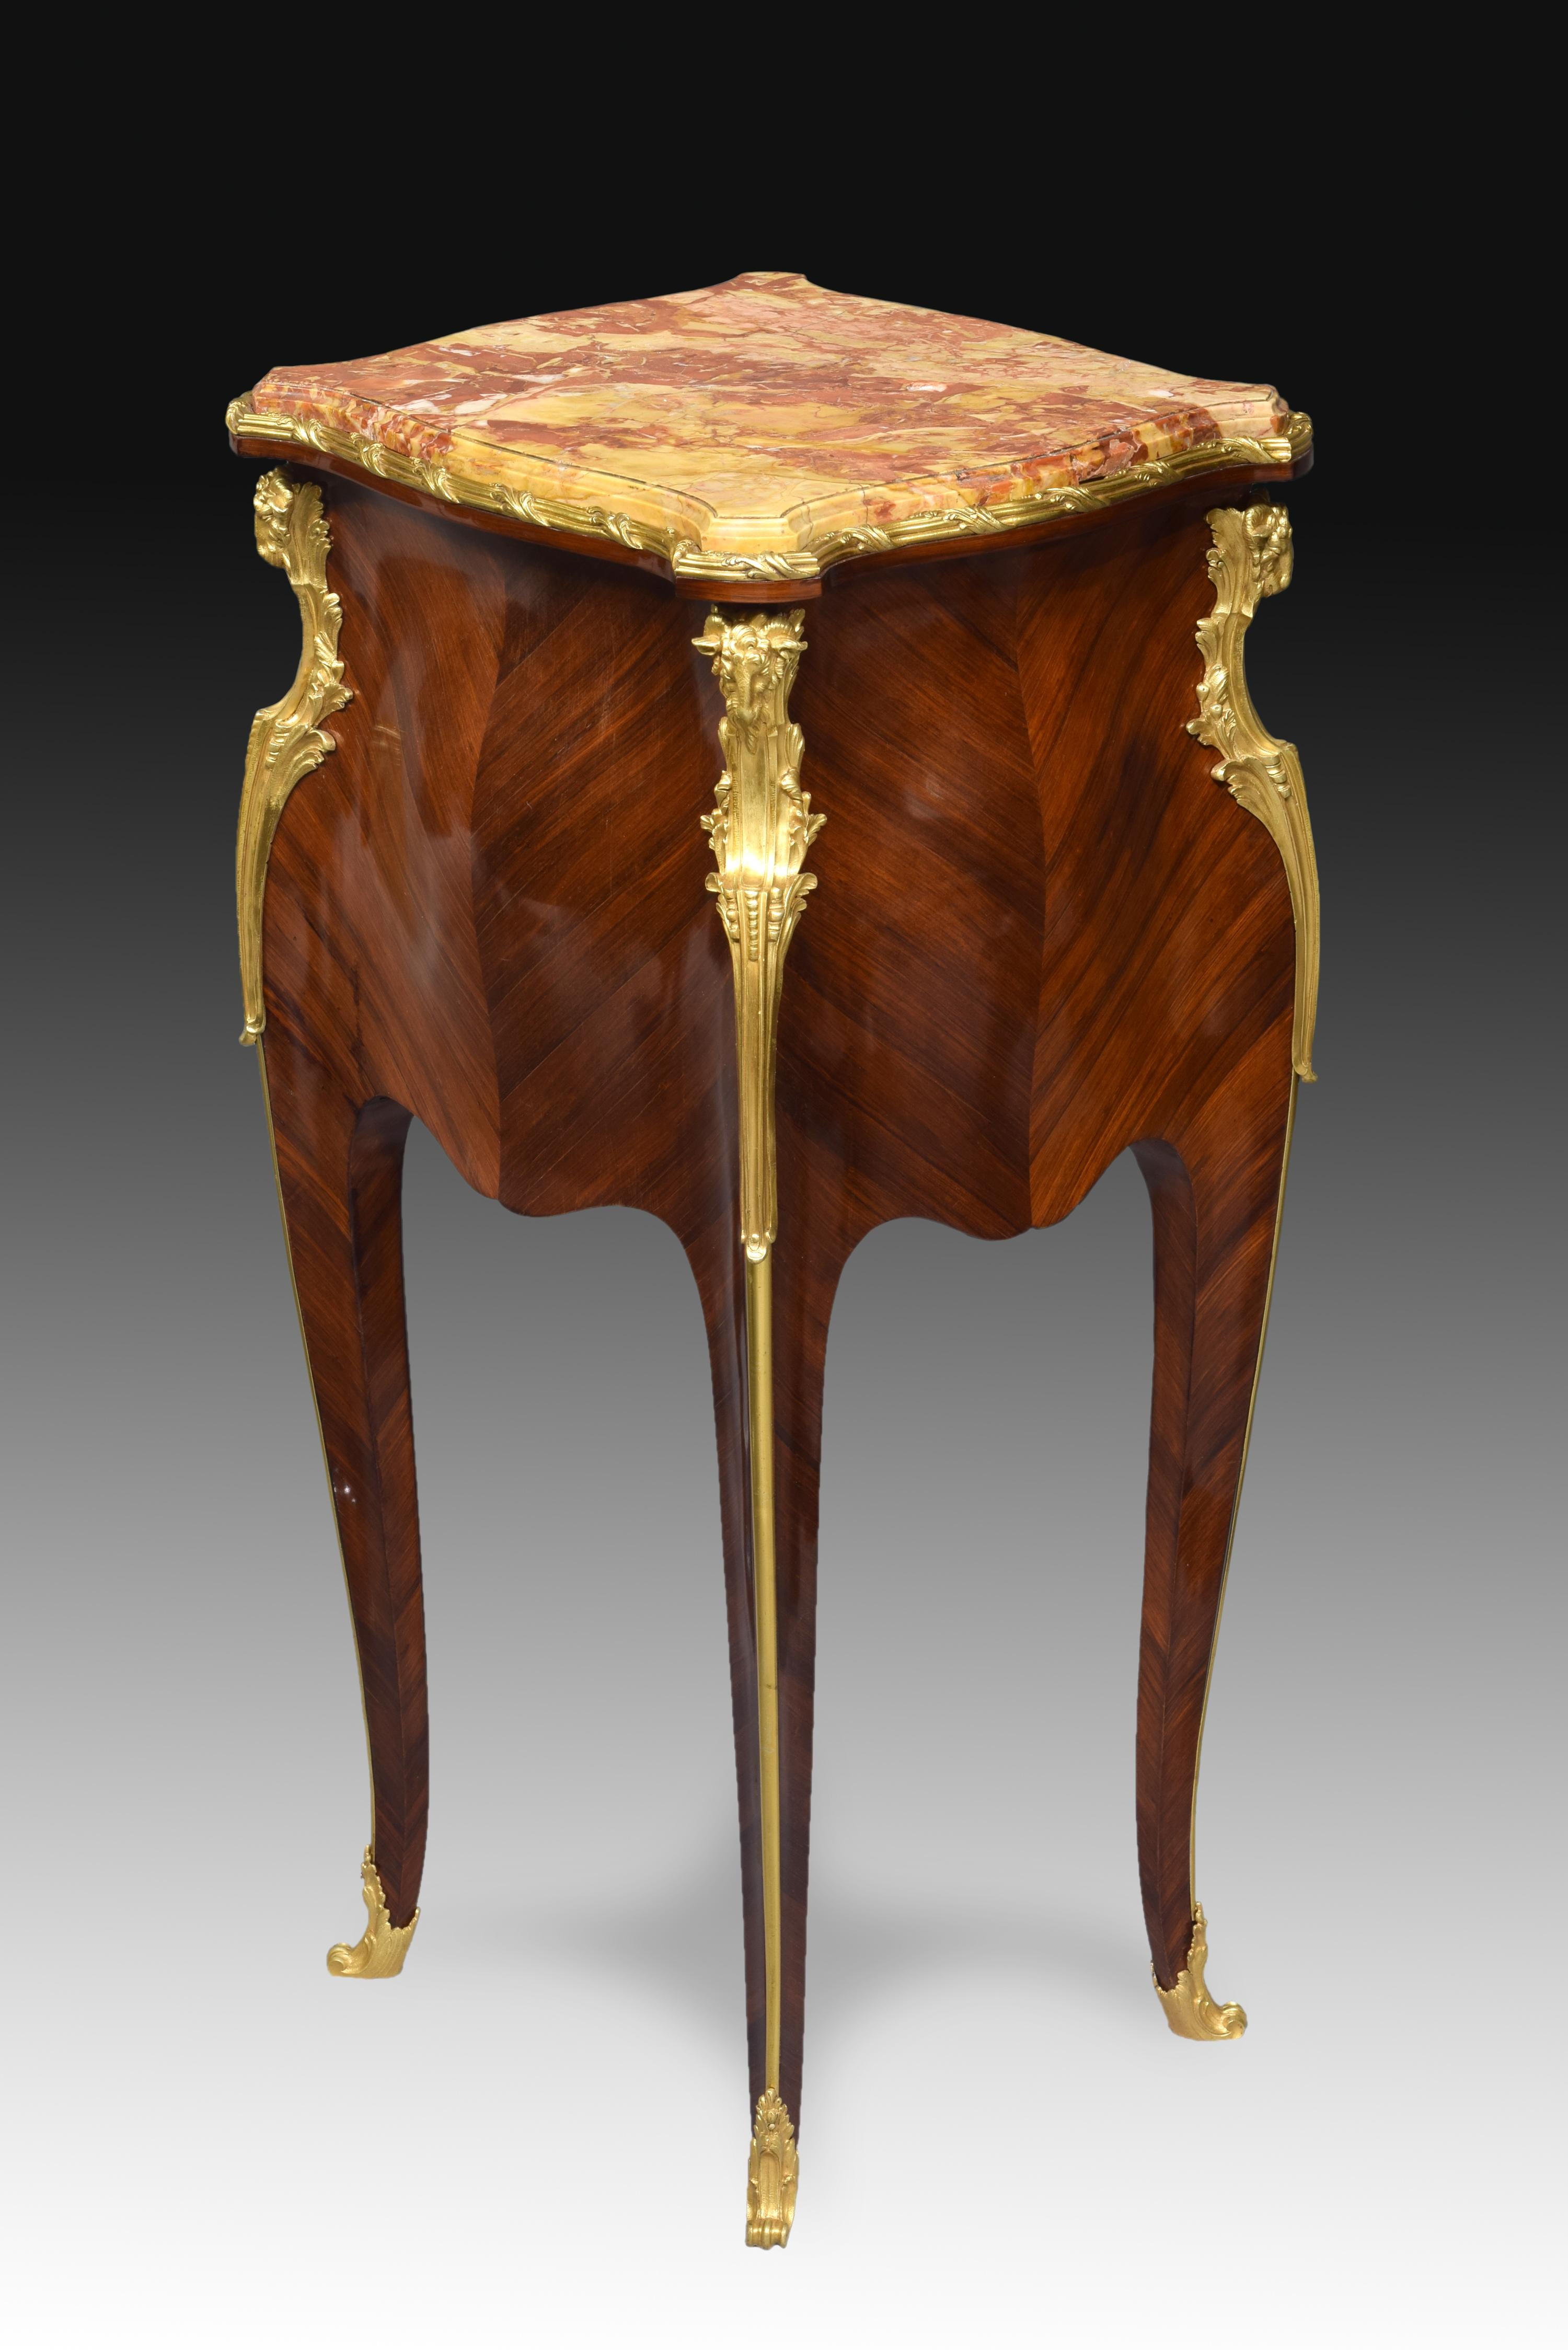 19th Century Louis XV Style Side Table, Attibuted to Joseph-Emmanuel Zwiener, France